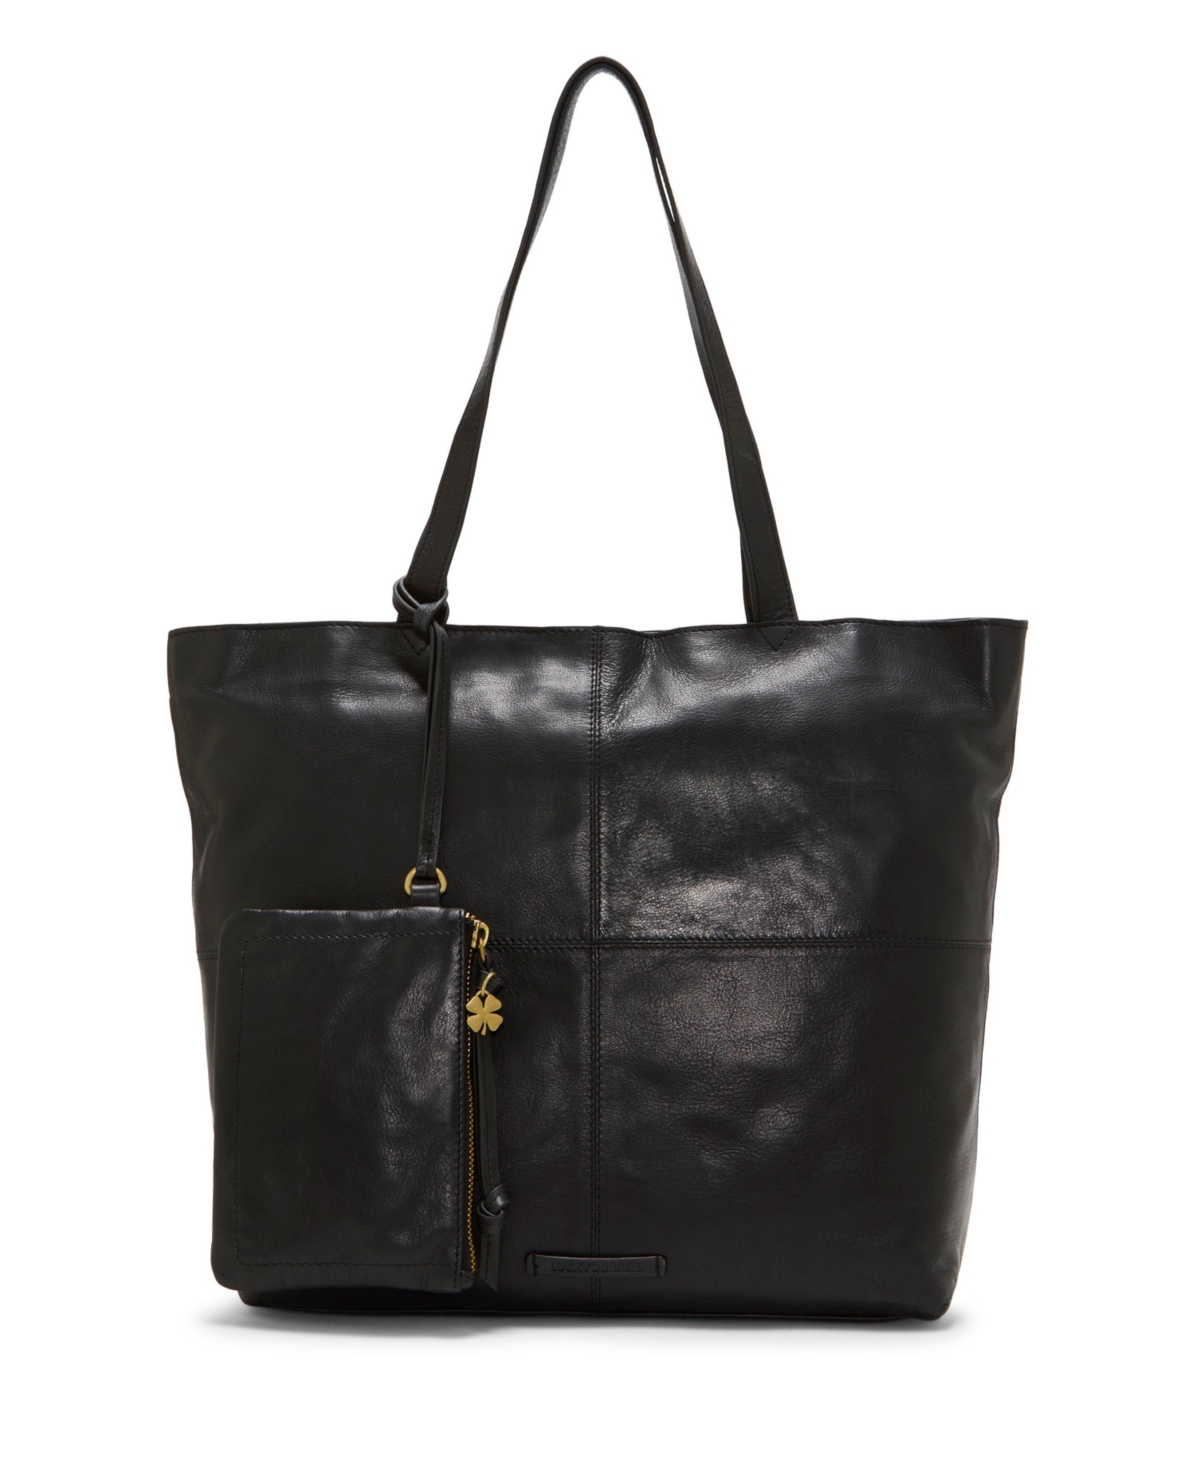 LUCKY BRAND Bags for Women | ModeSens